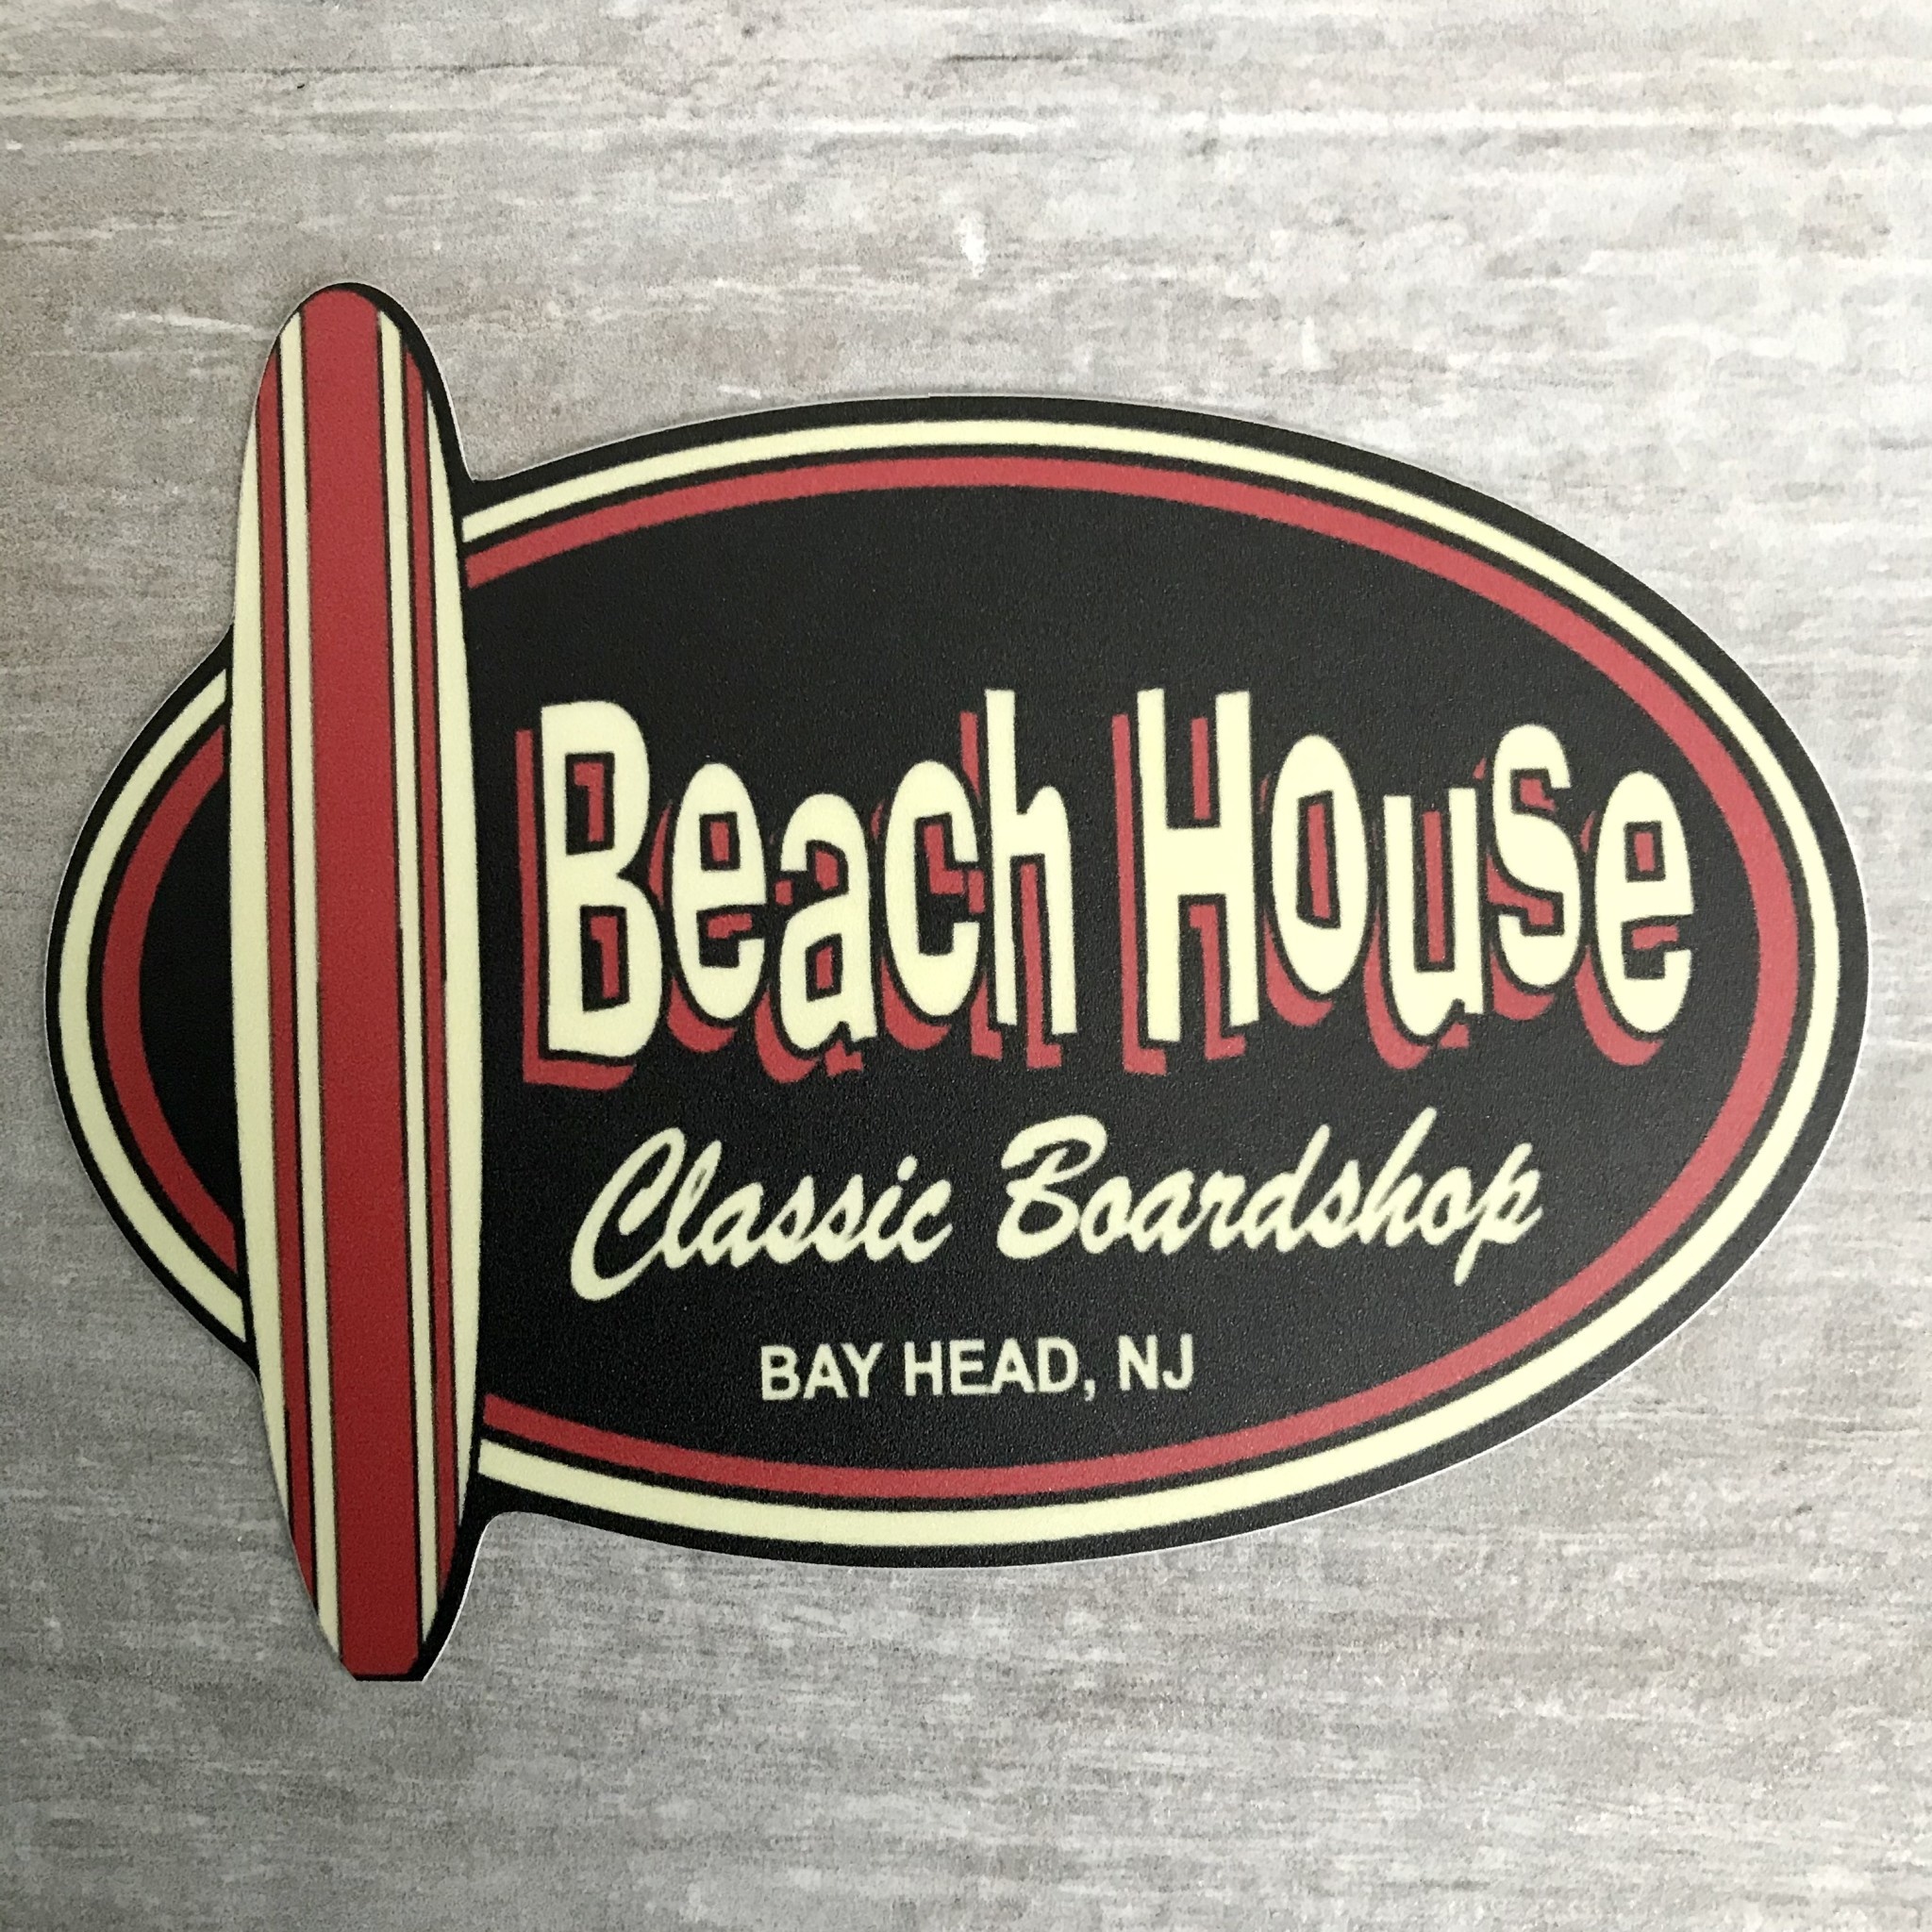 Beach House BEACH HOUSE CLASSIC LOGO STICKER